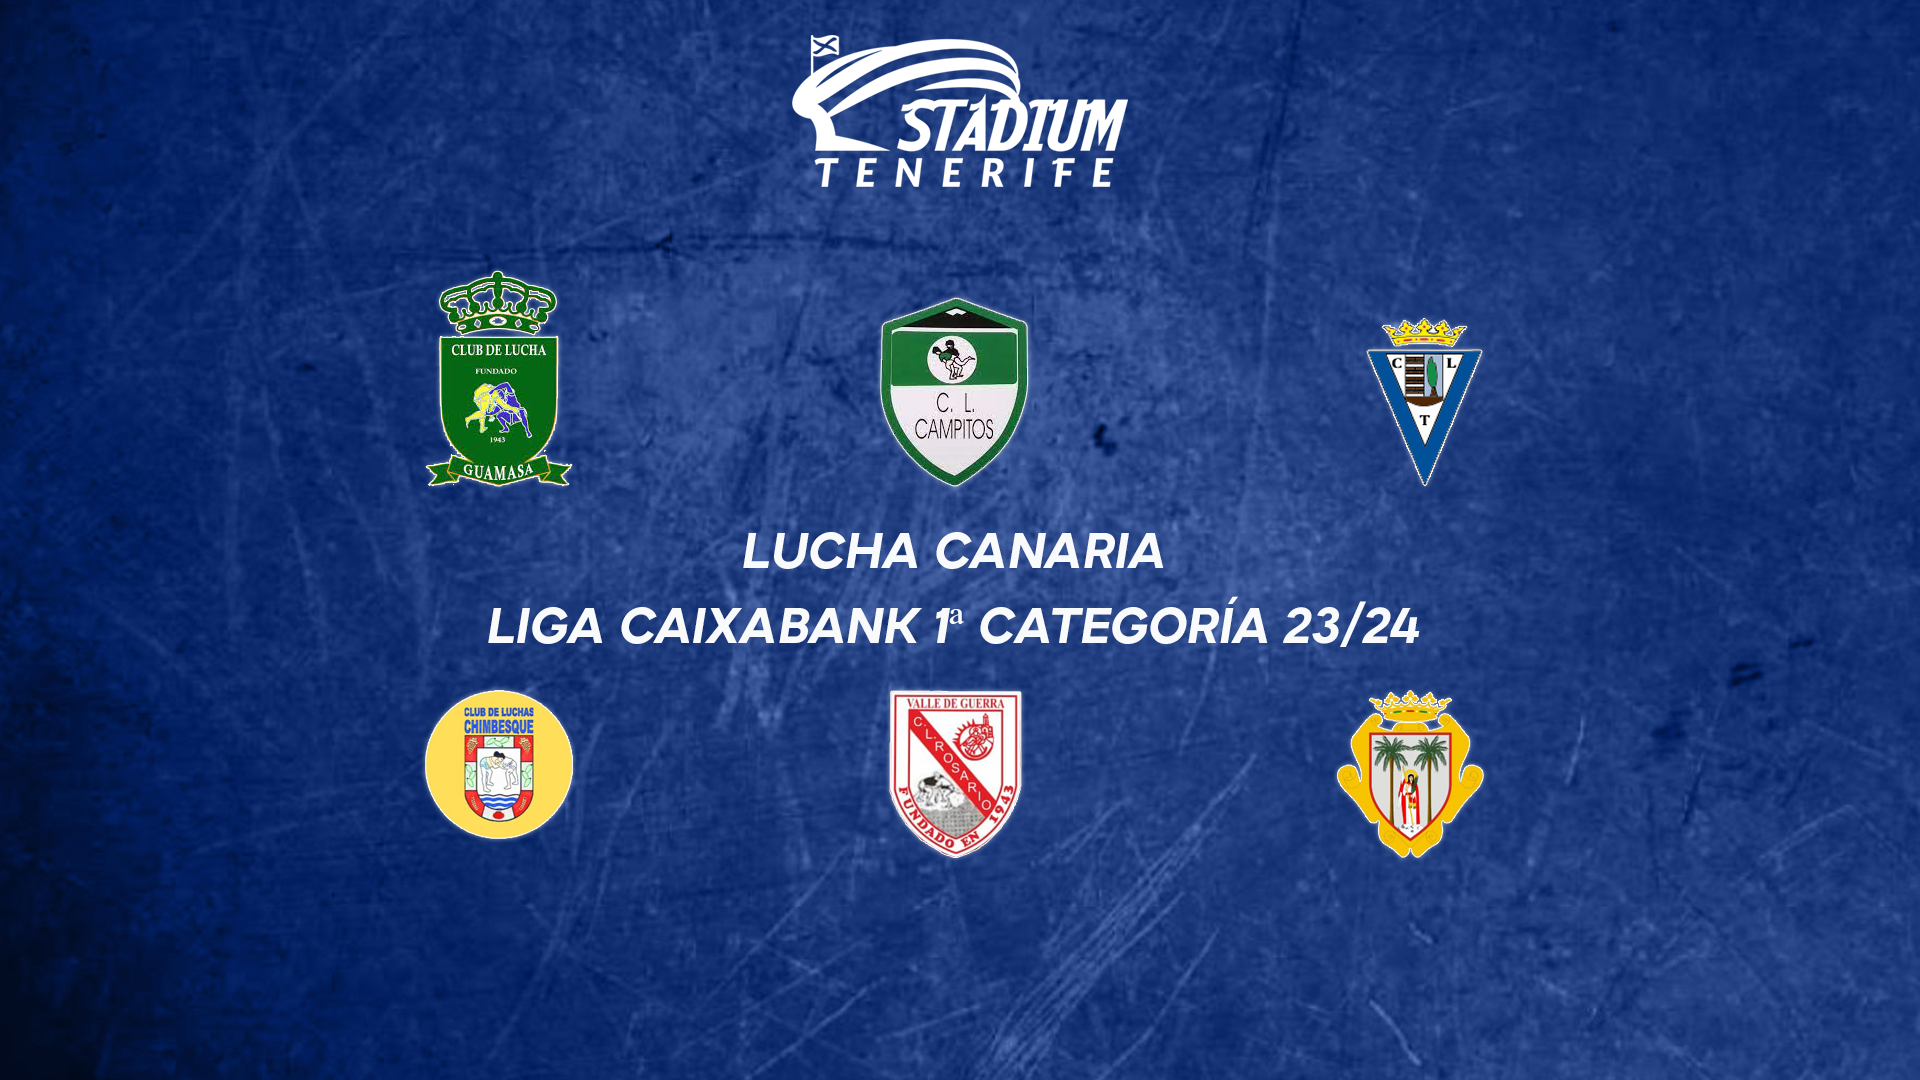 PREVIA | 2ª jornada de la Liga CaixaBank de Lucha Canaria (27, 28 y 29 de octubre)